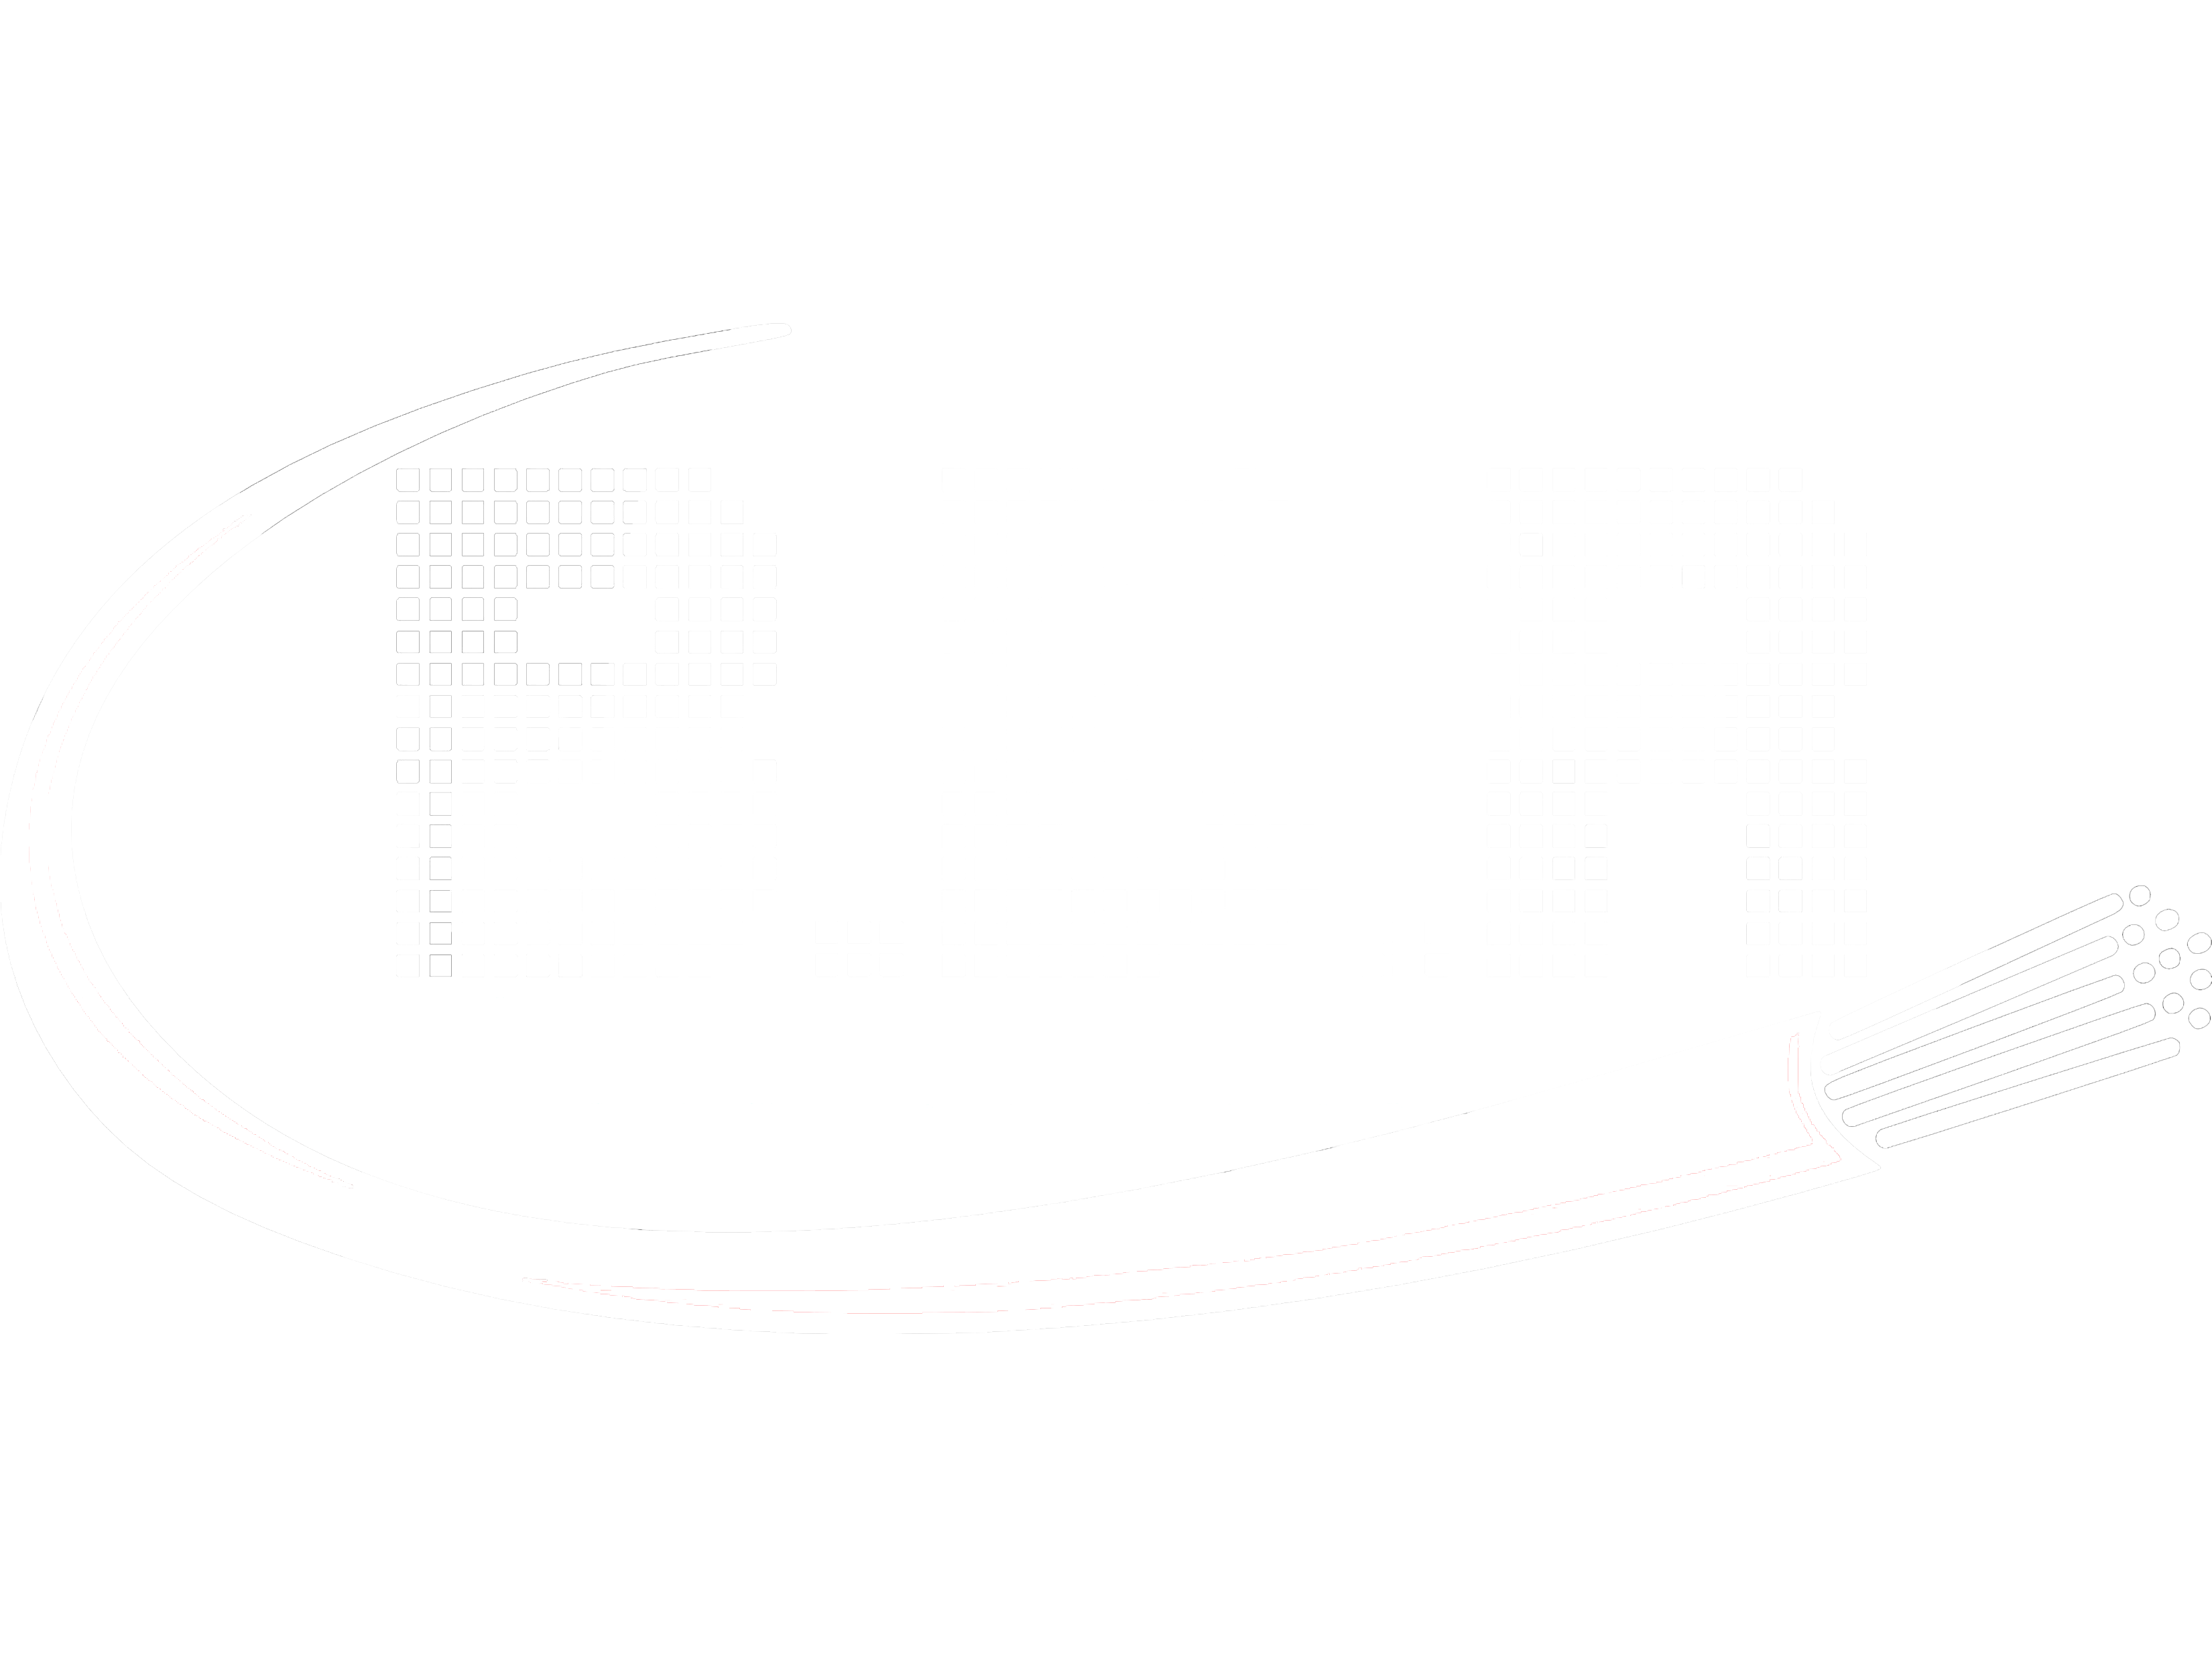 BBR